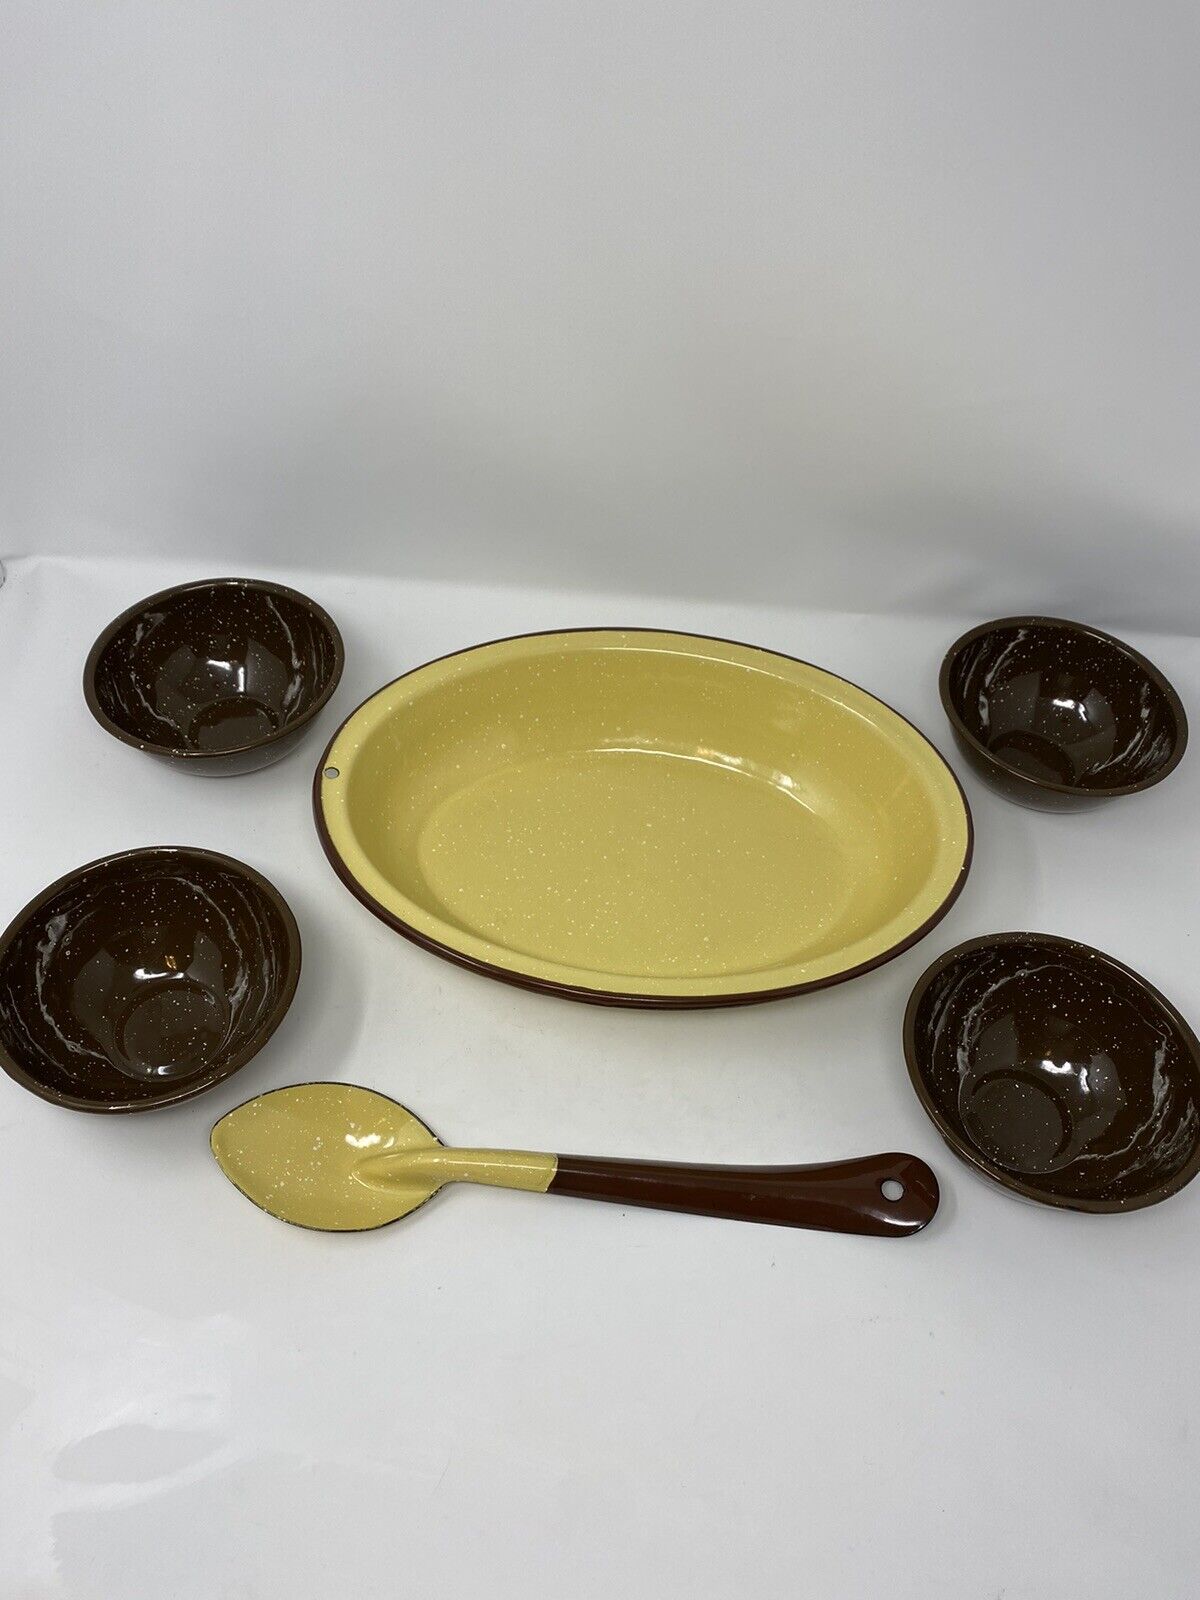 Vintage Granite ware speckled yellow brown metal serving dish large spoon bowl